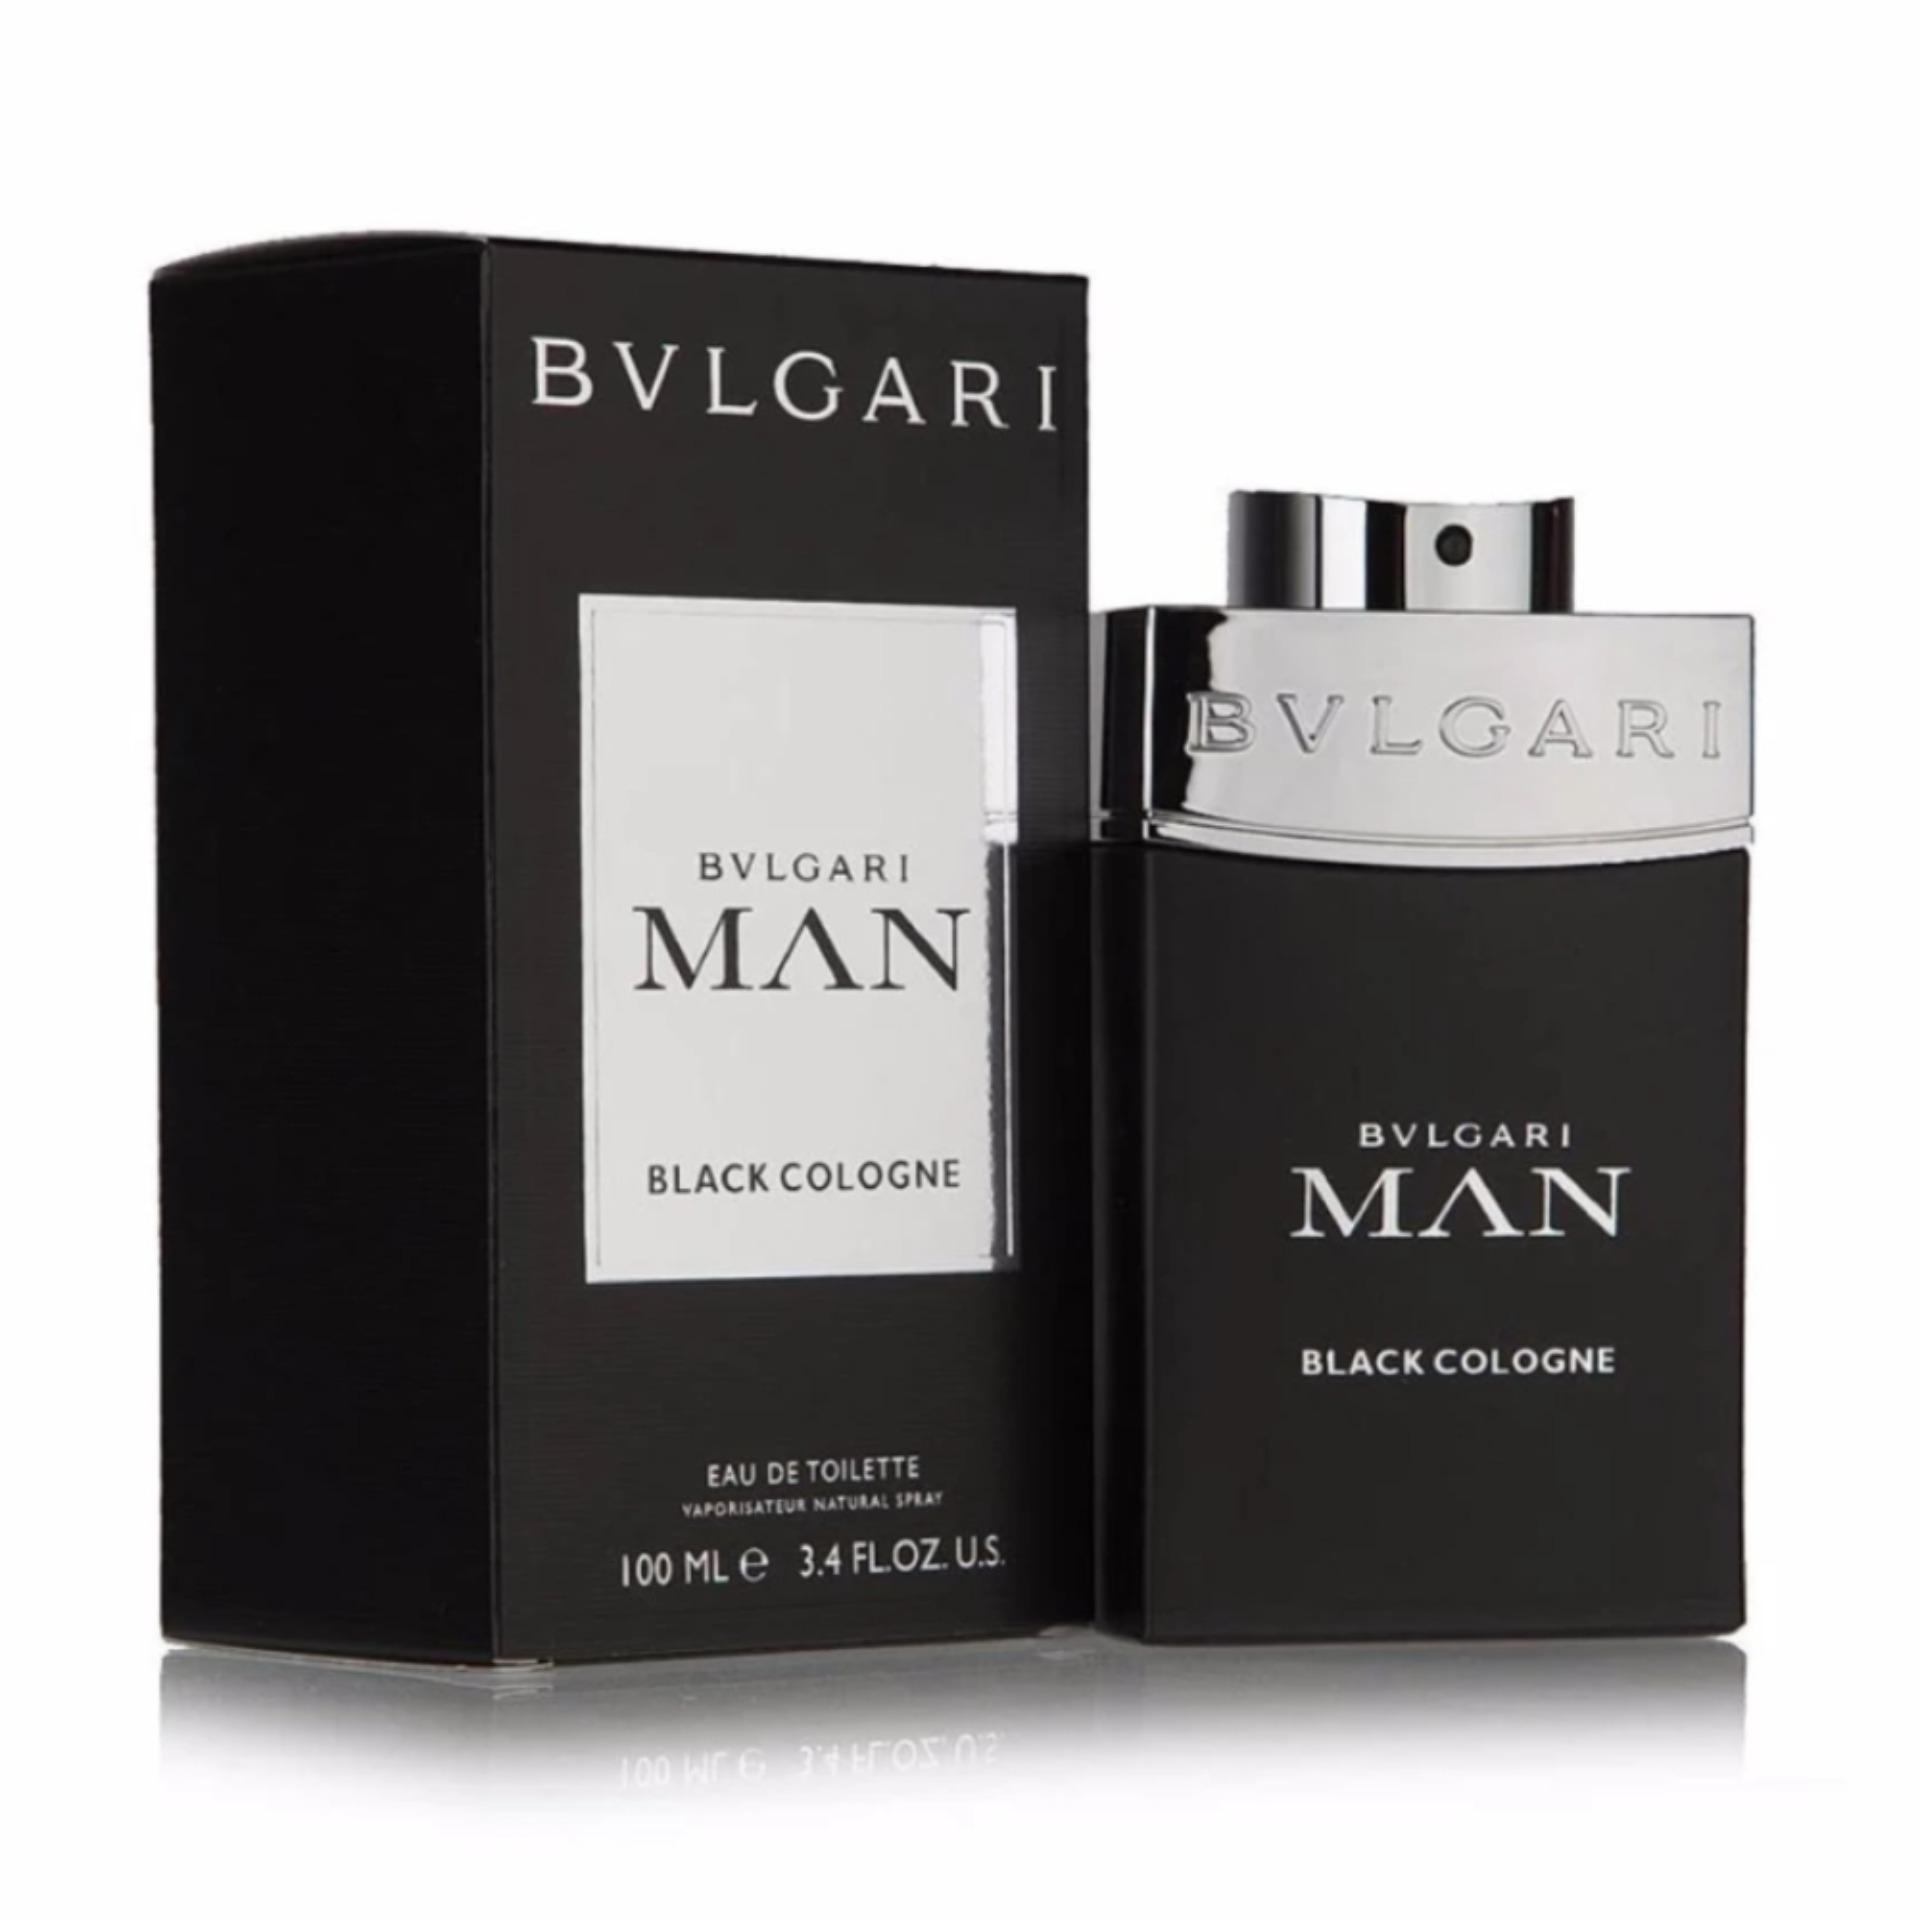 bvlgari man black cologne review